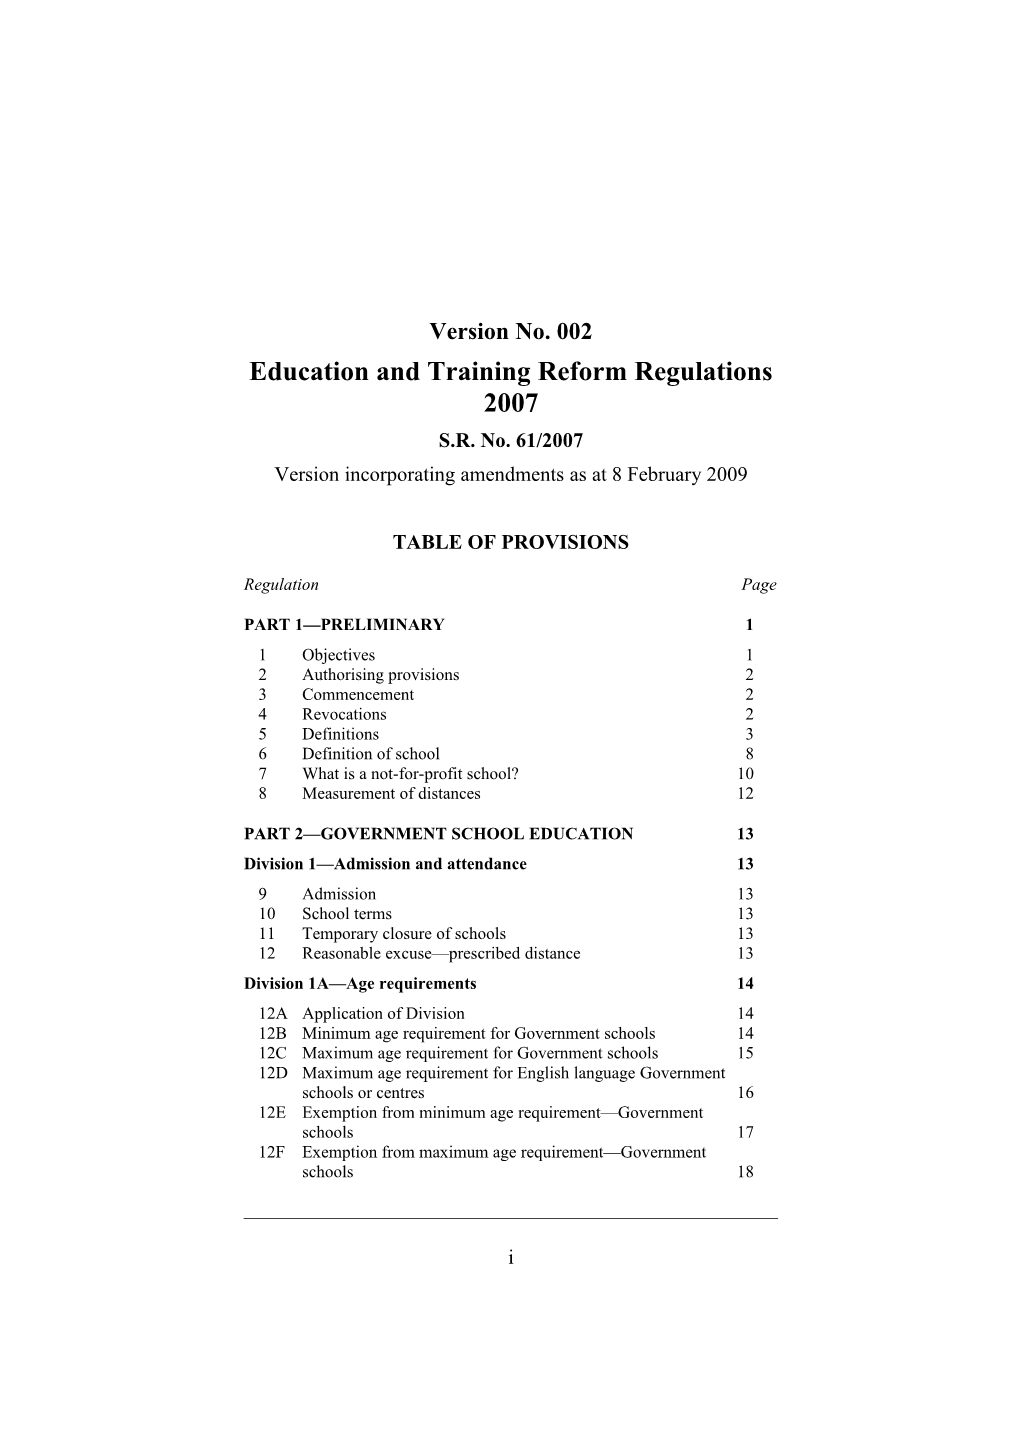 Education and Training Reform Regulations 2007